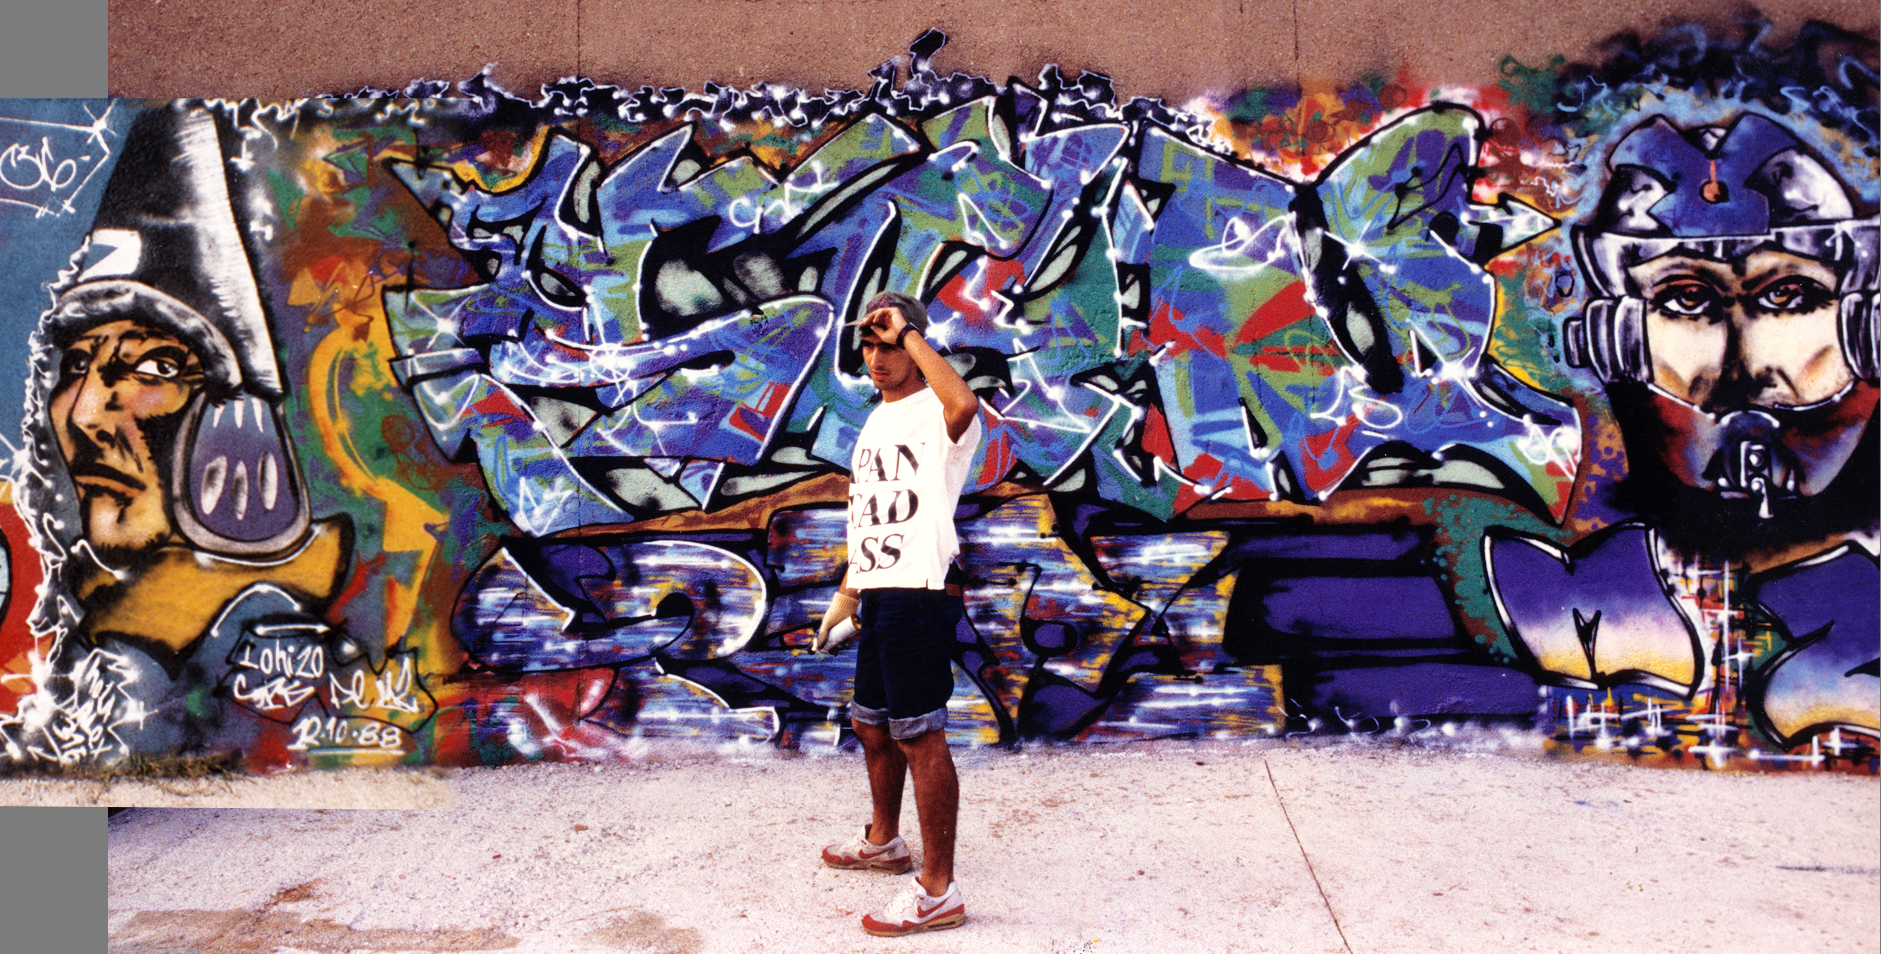 Graffiti de Kapi en Barcelona, 1988.